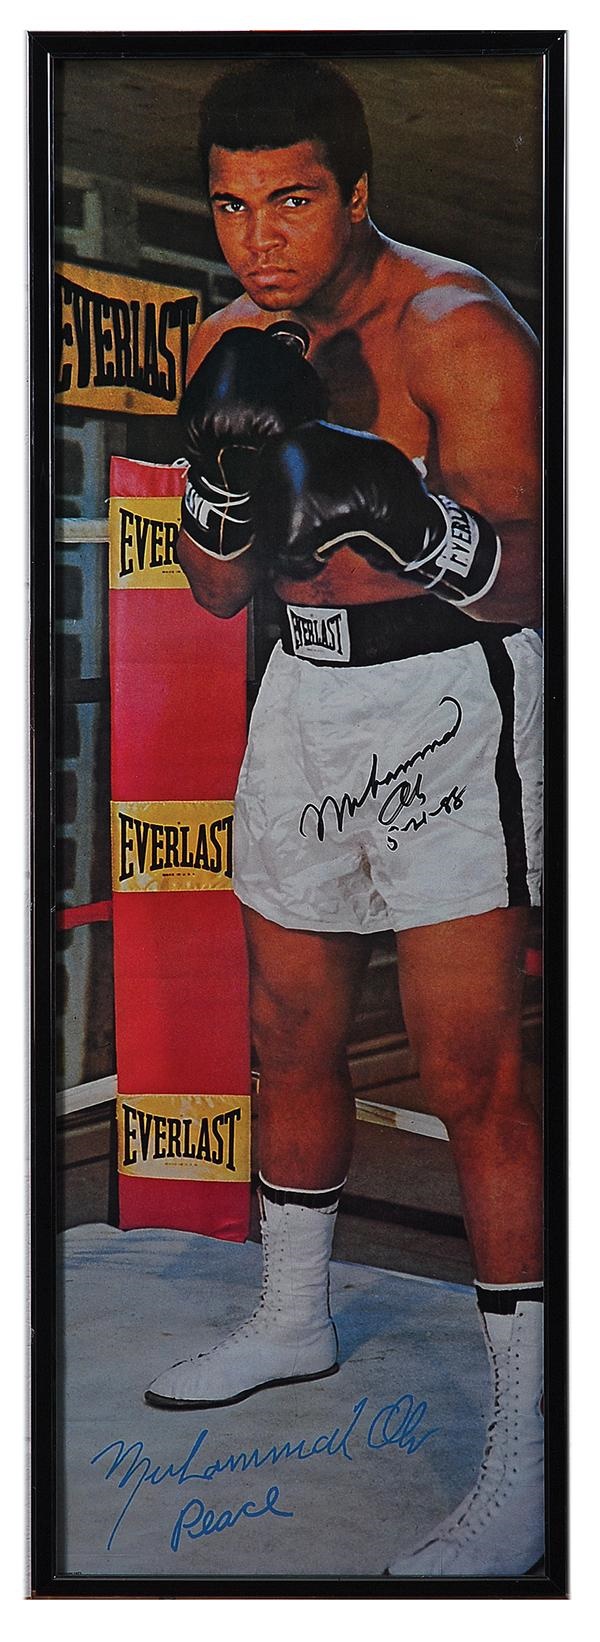 Muhammad Ali & Boxing - Muhammad Ali Signed Poster